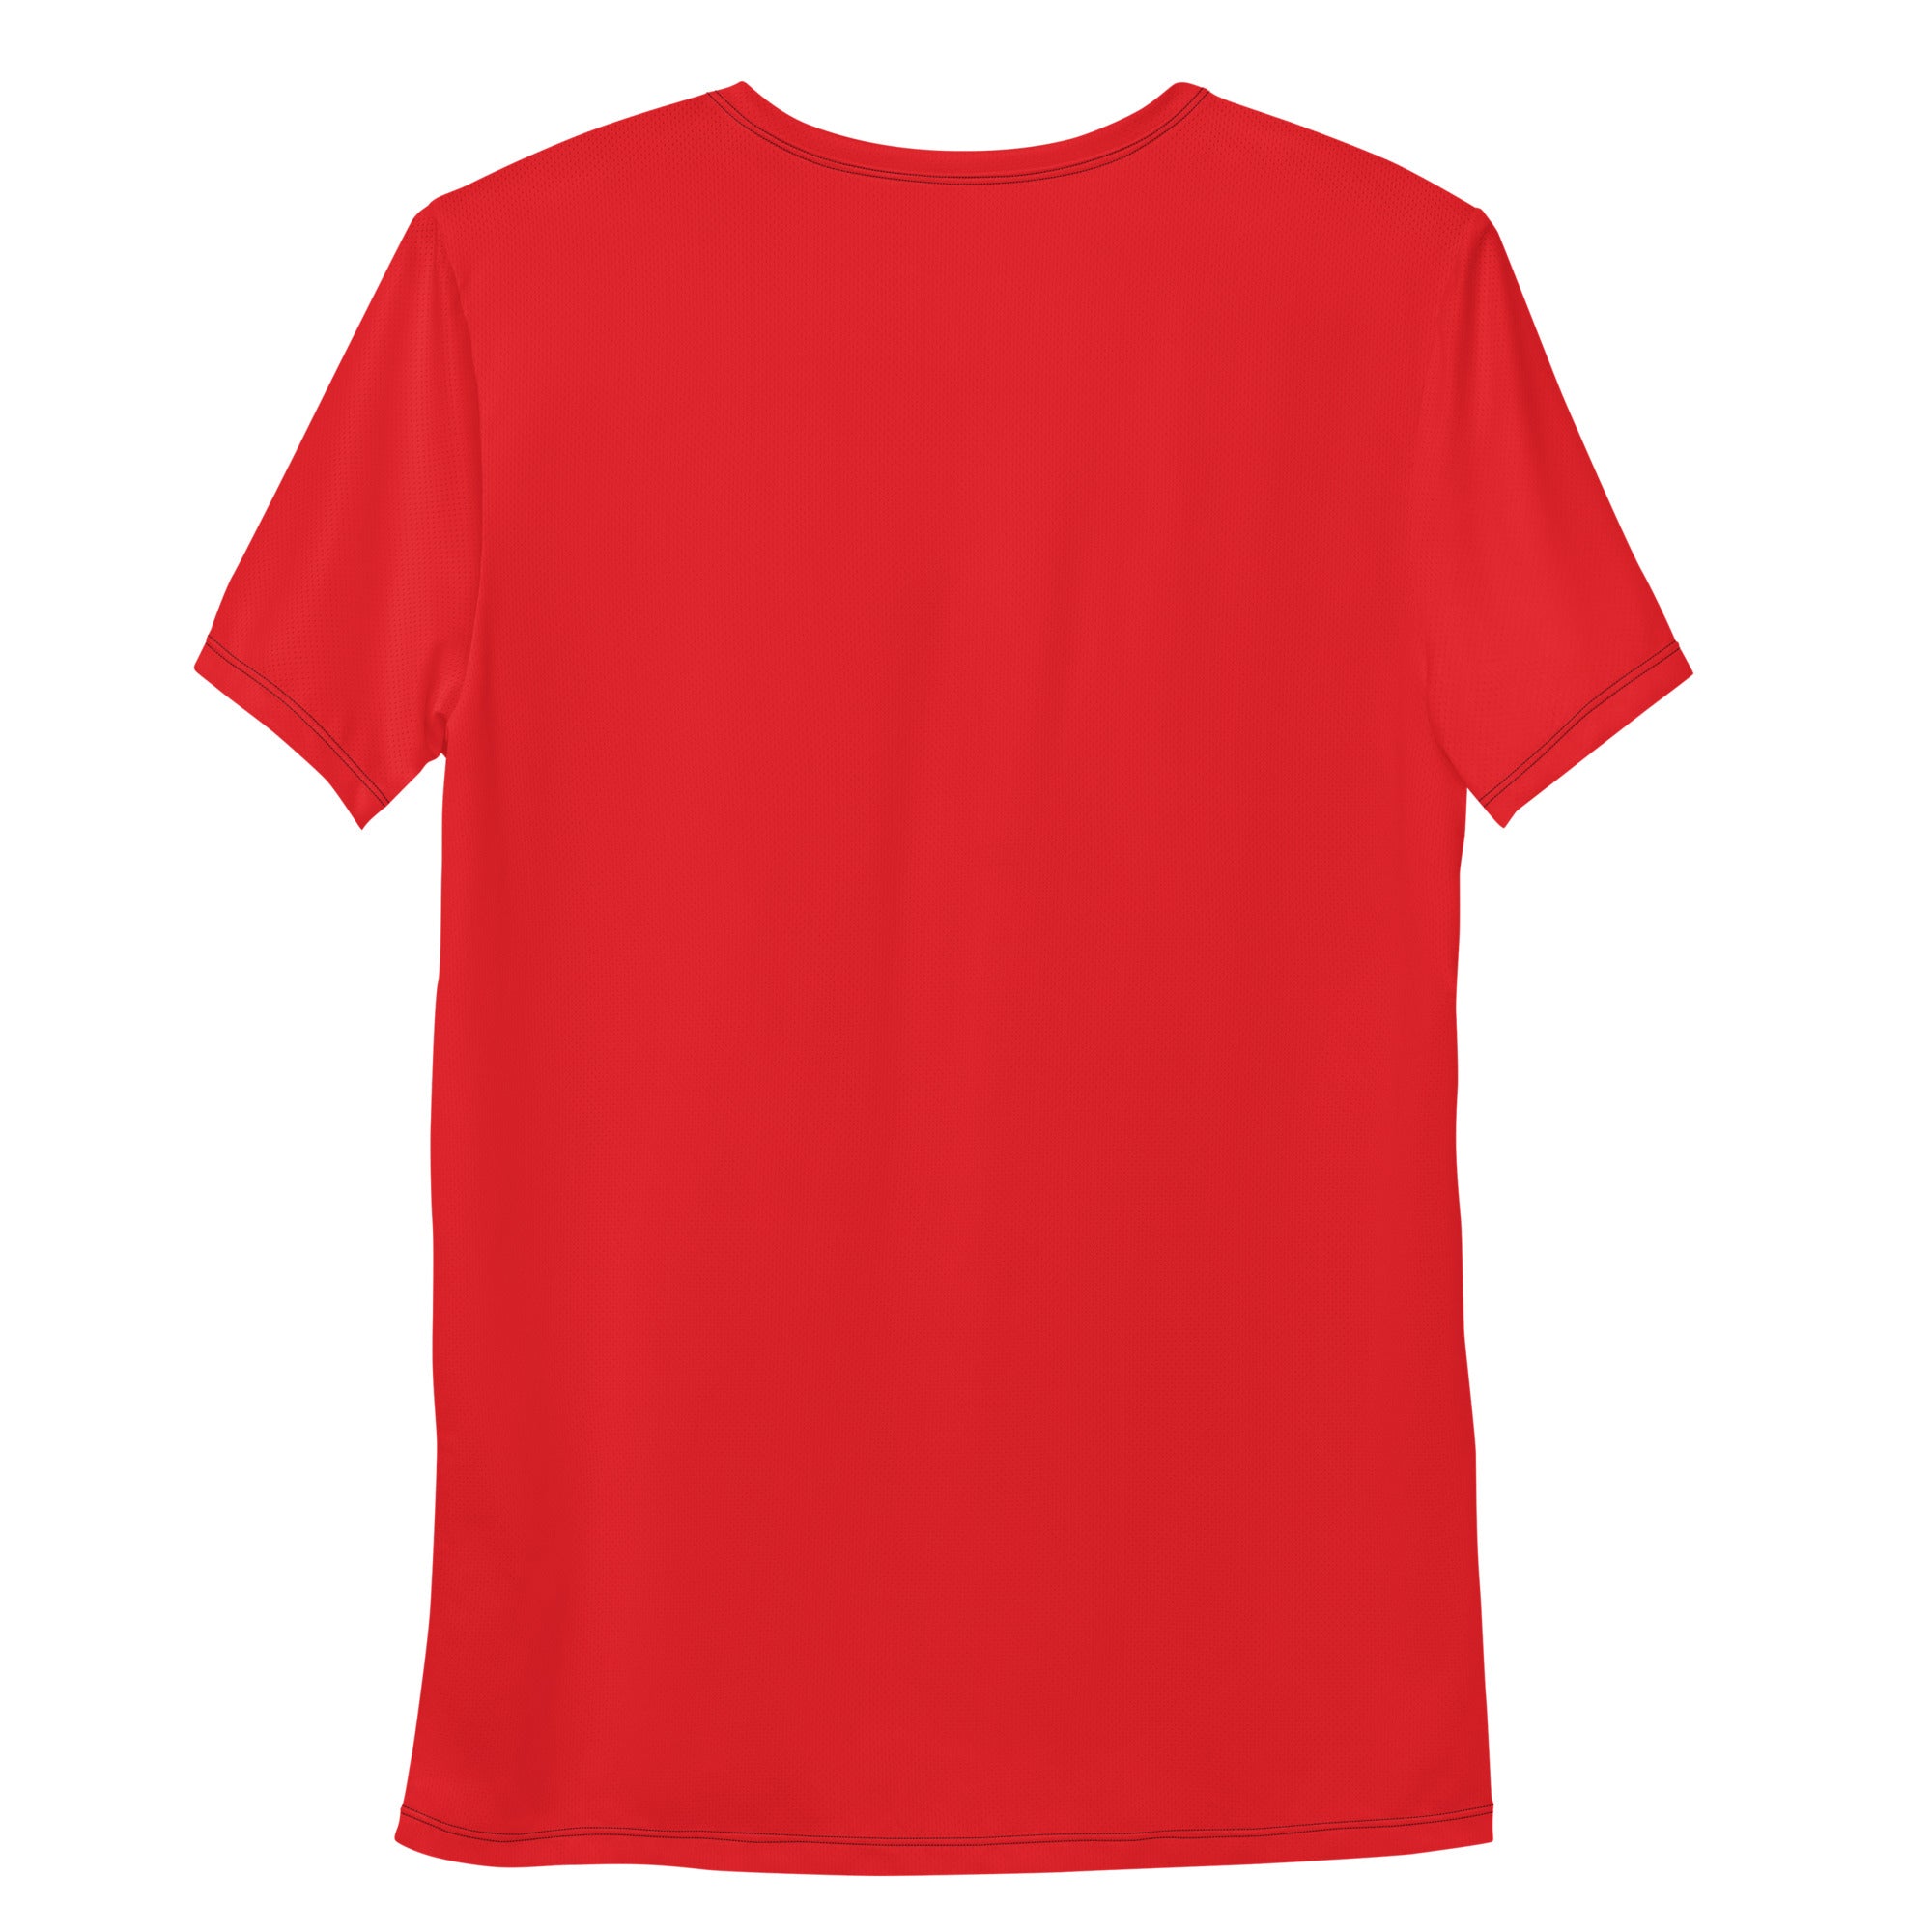 PPA Performance Short Sleeve Men's Athletic T-shirt v6